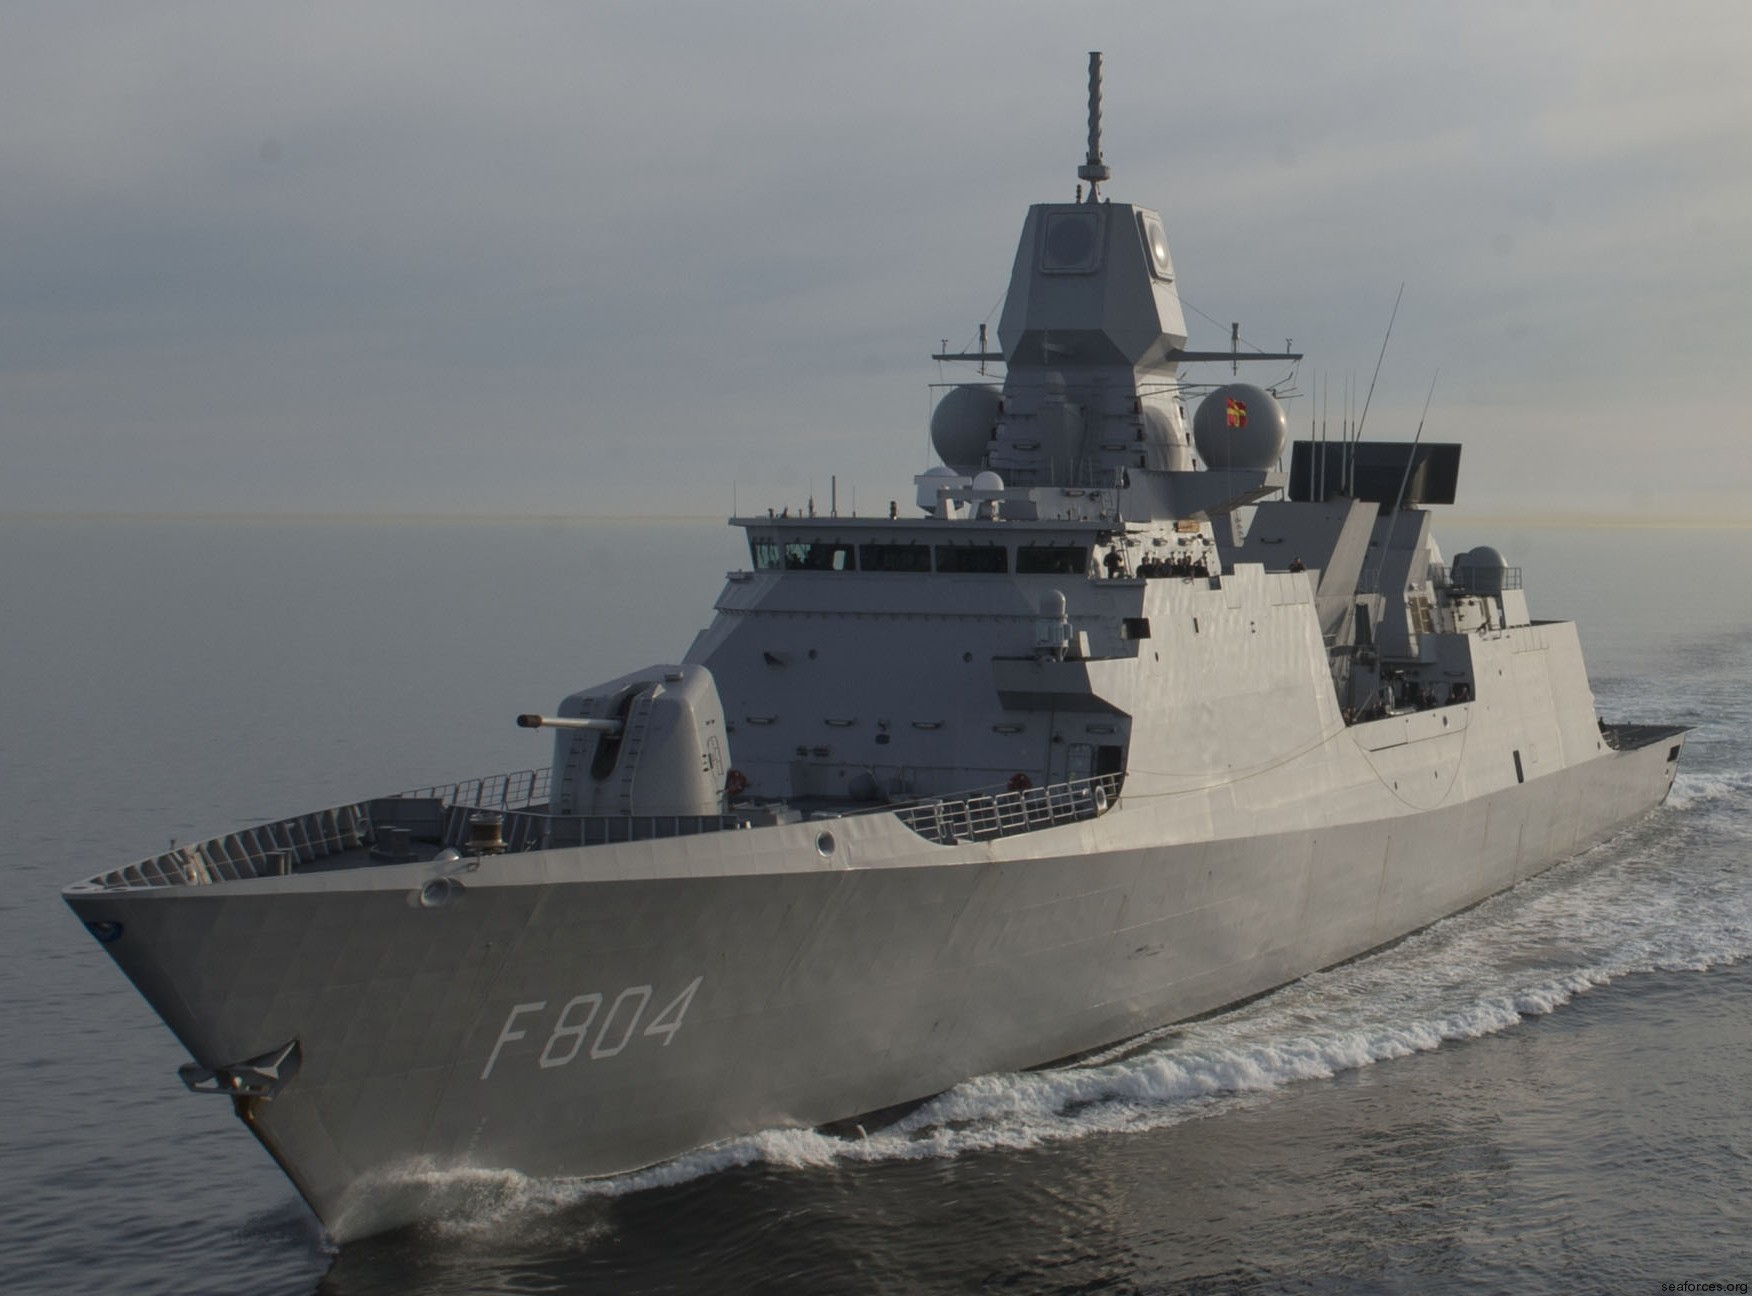 f-804 hnlms de ruyter guided missile frigate ffg lcf royal netherlands navy 29 de zeven provincien class